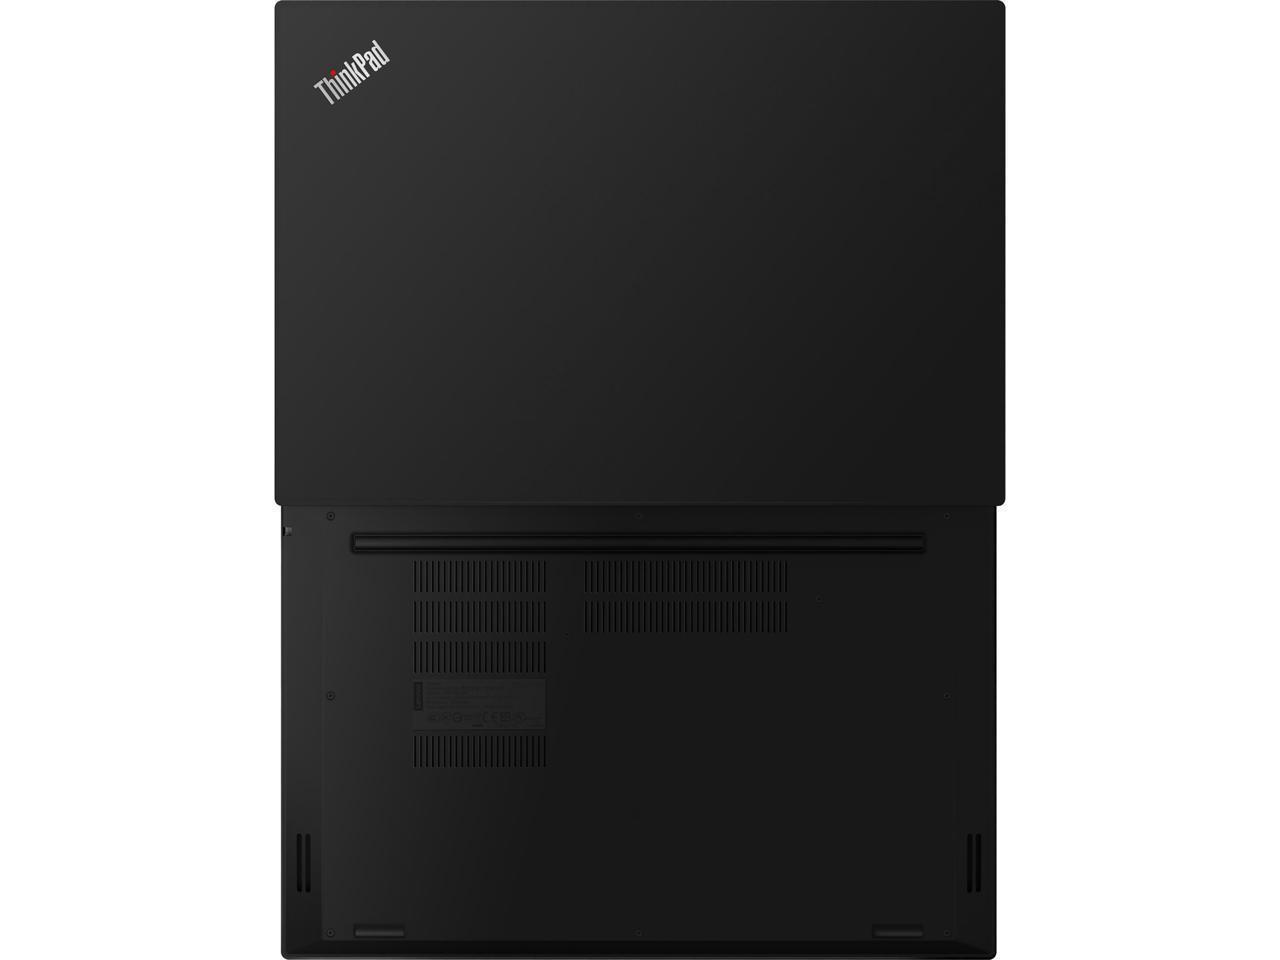 Lenovo Laptop ThinkPad E595 20NF0012US AMD Ryzen 5 3000 Series 3500U (2.10 GHz) 8 GB Memory 256 GB SSD AMD Radeon Vega 8 15.6" Windows 10 Pro 64-bit